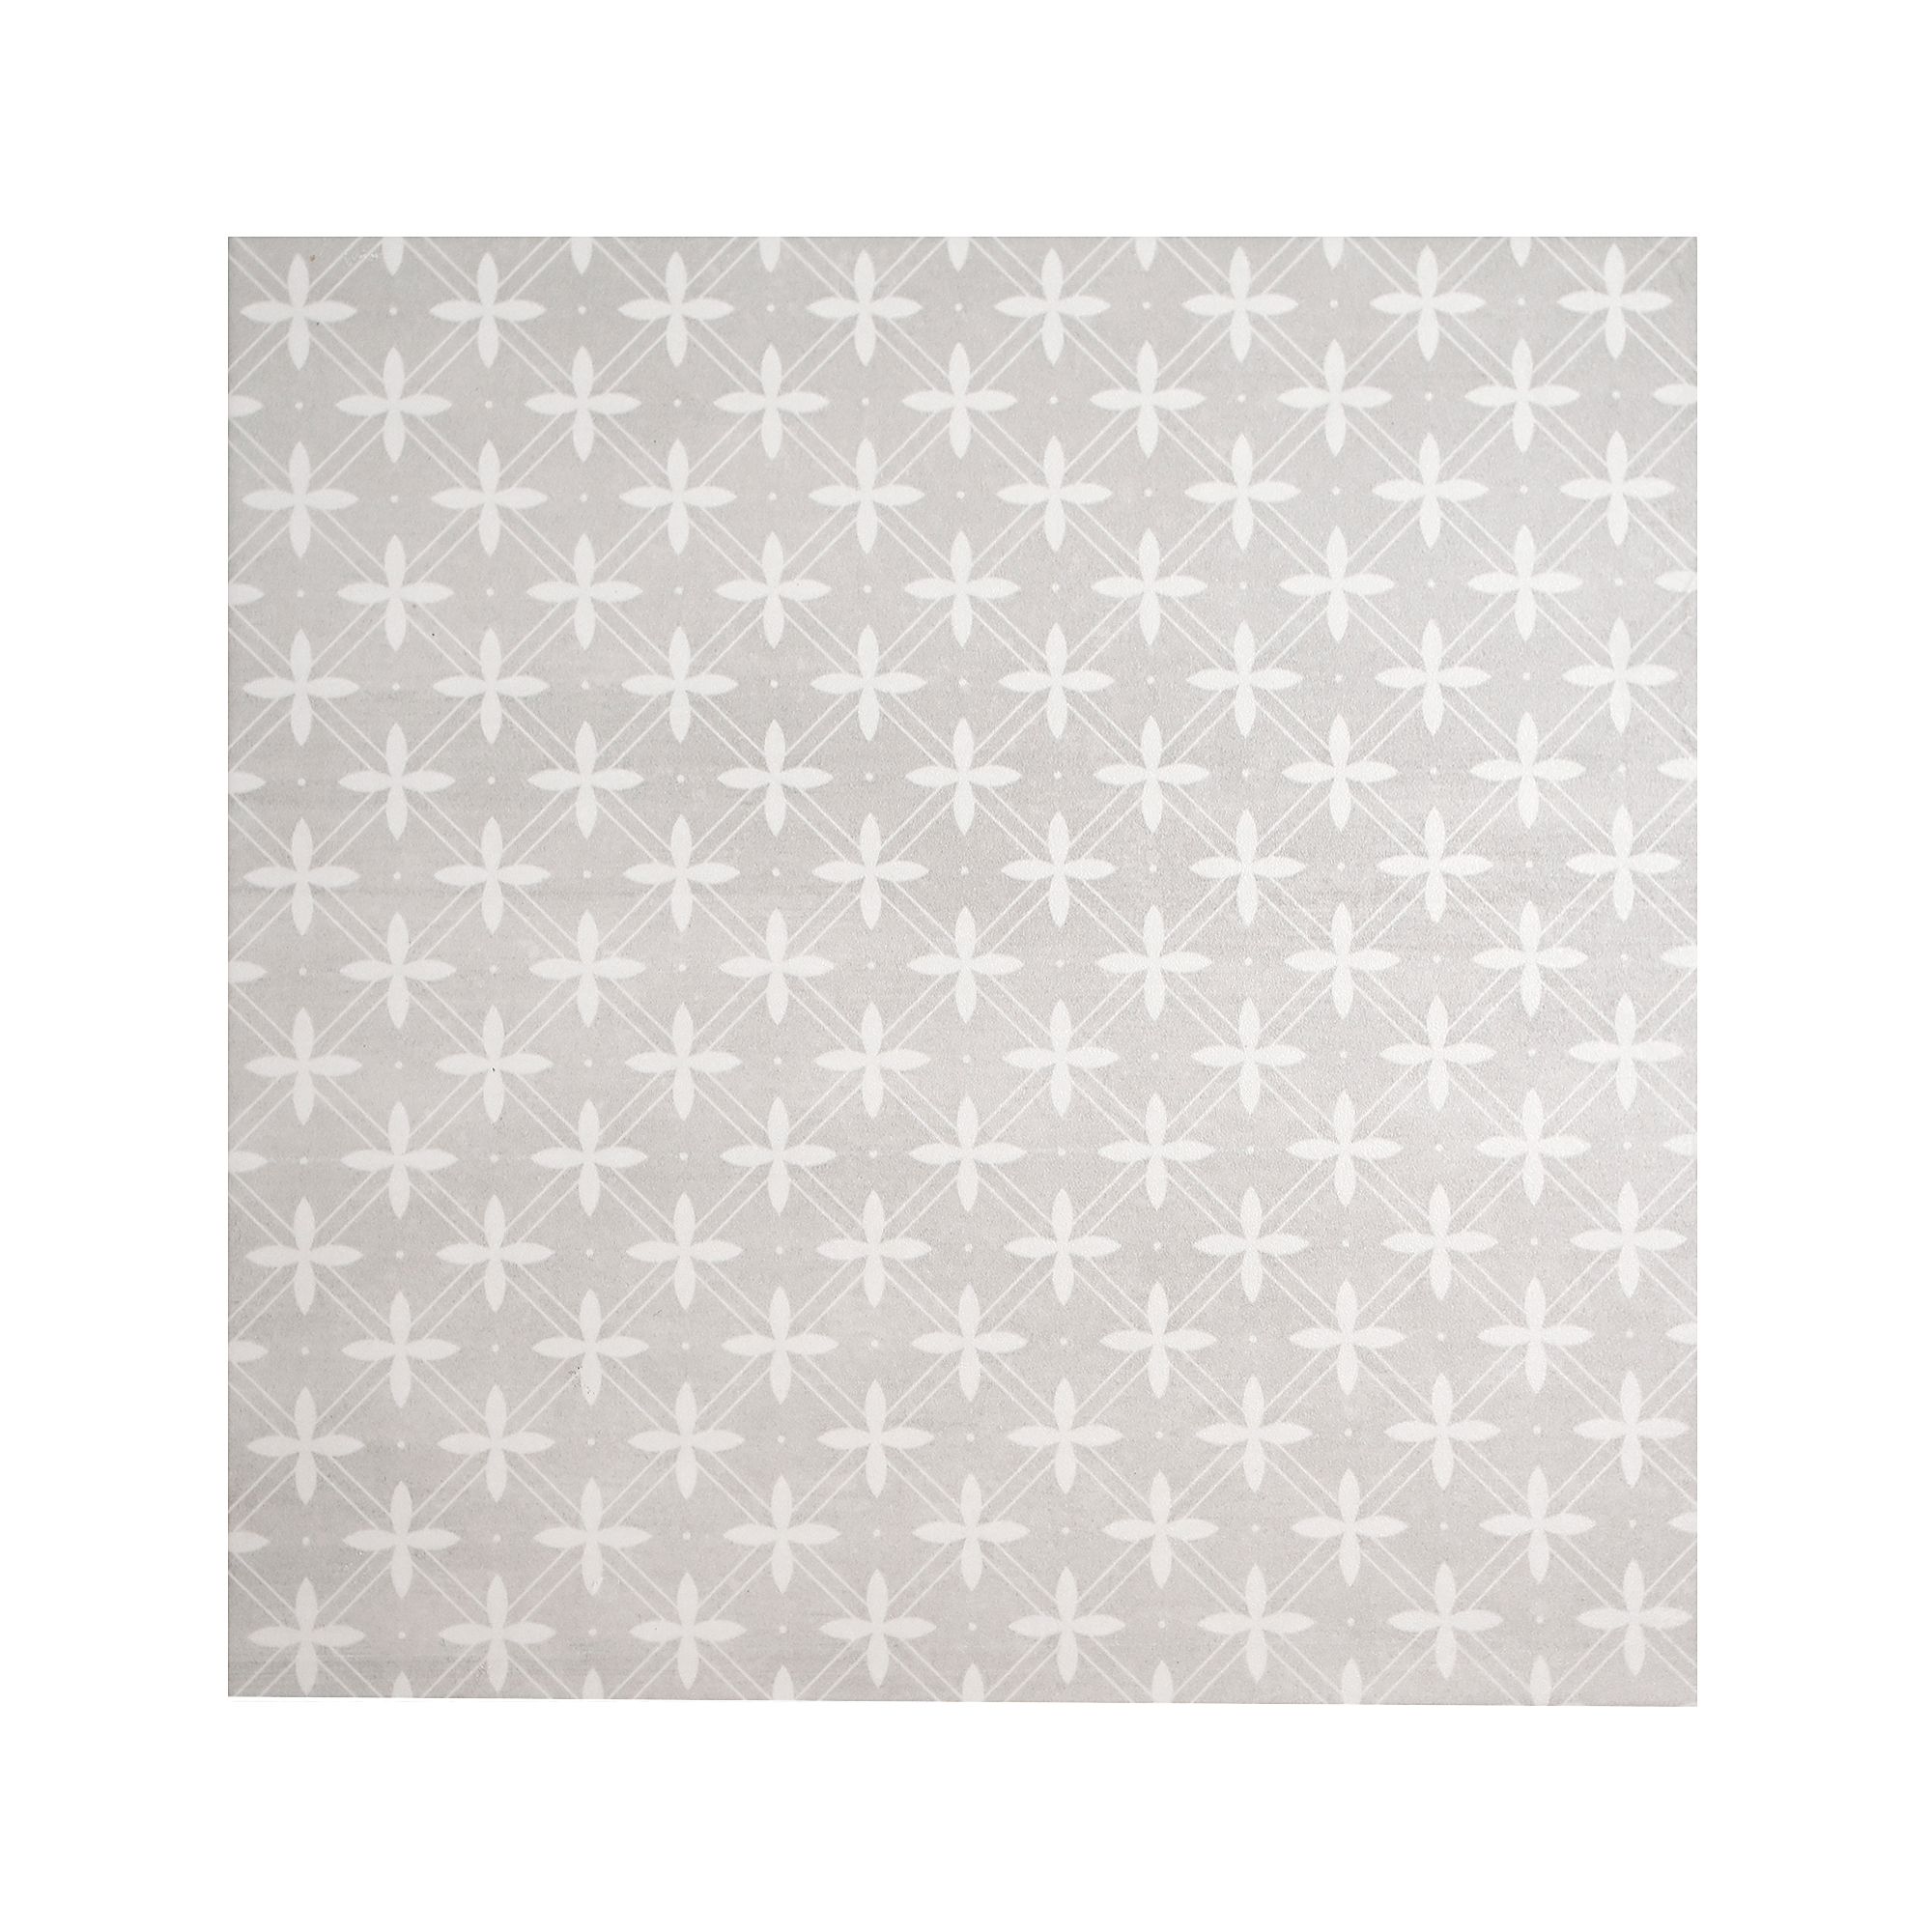 Laura Ashley Wickerwork Dove Grey Matt Patterned Cement tile effect Ceramic Indoor Wall & floor tile, (L)300mm (W)300mm, 0.99m²